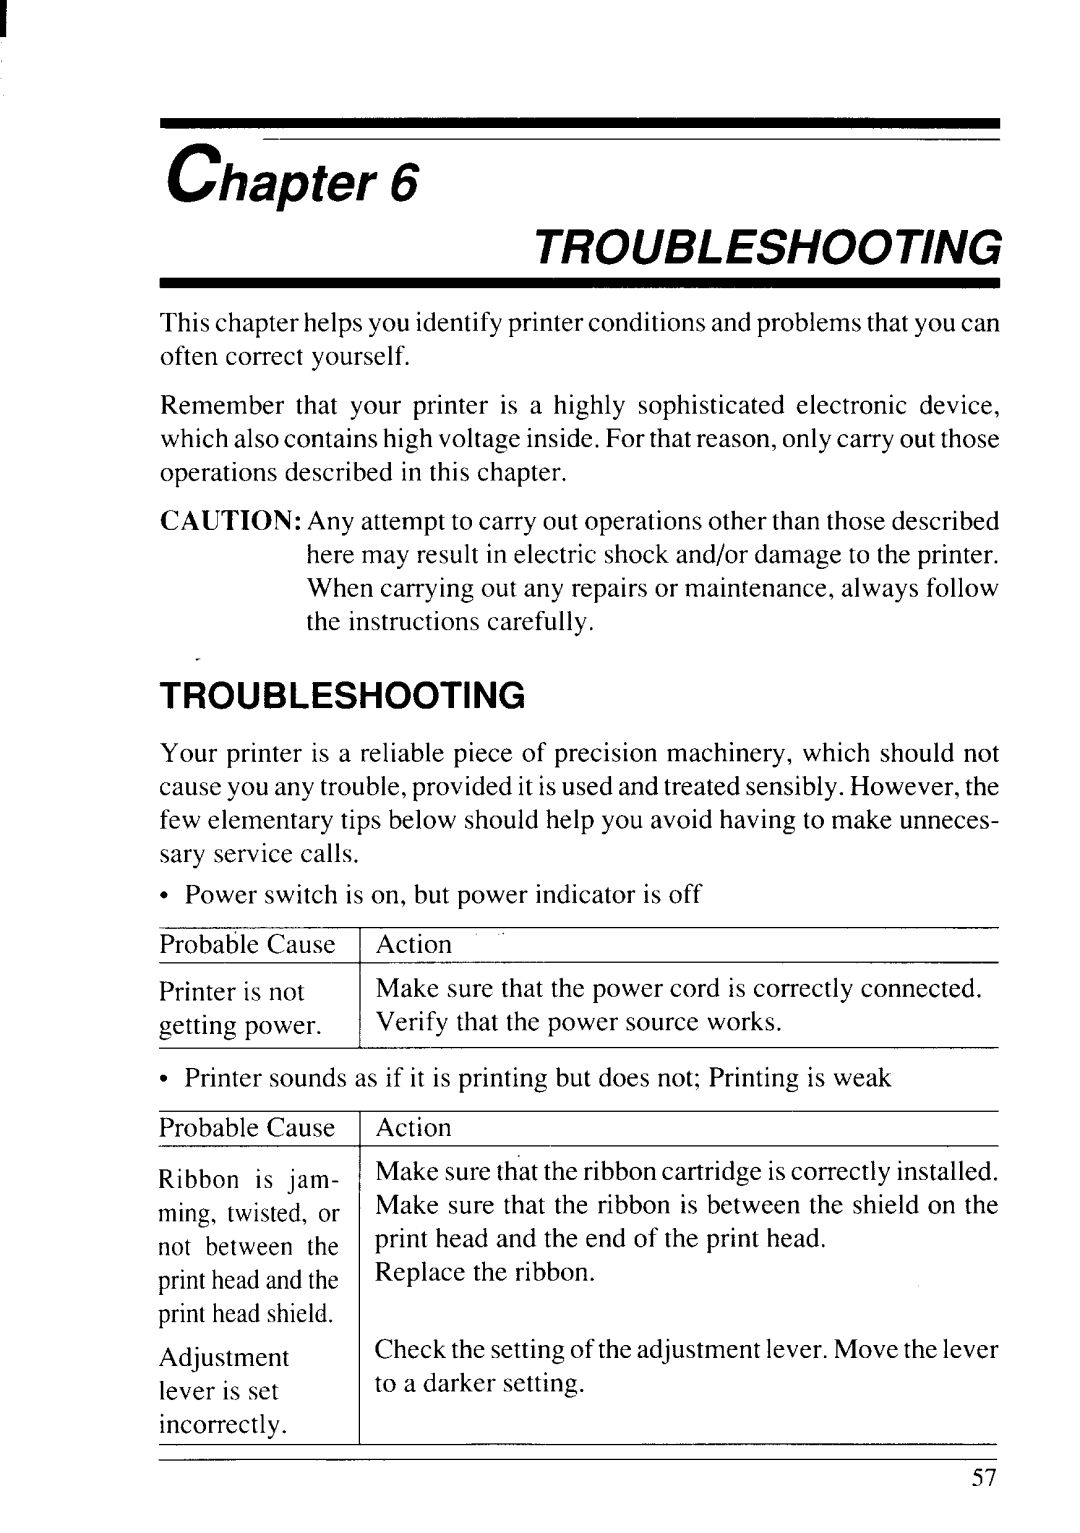 Star Micronics NX-2430 manual Troubleshooting, chapter 